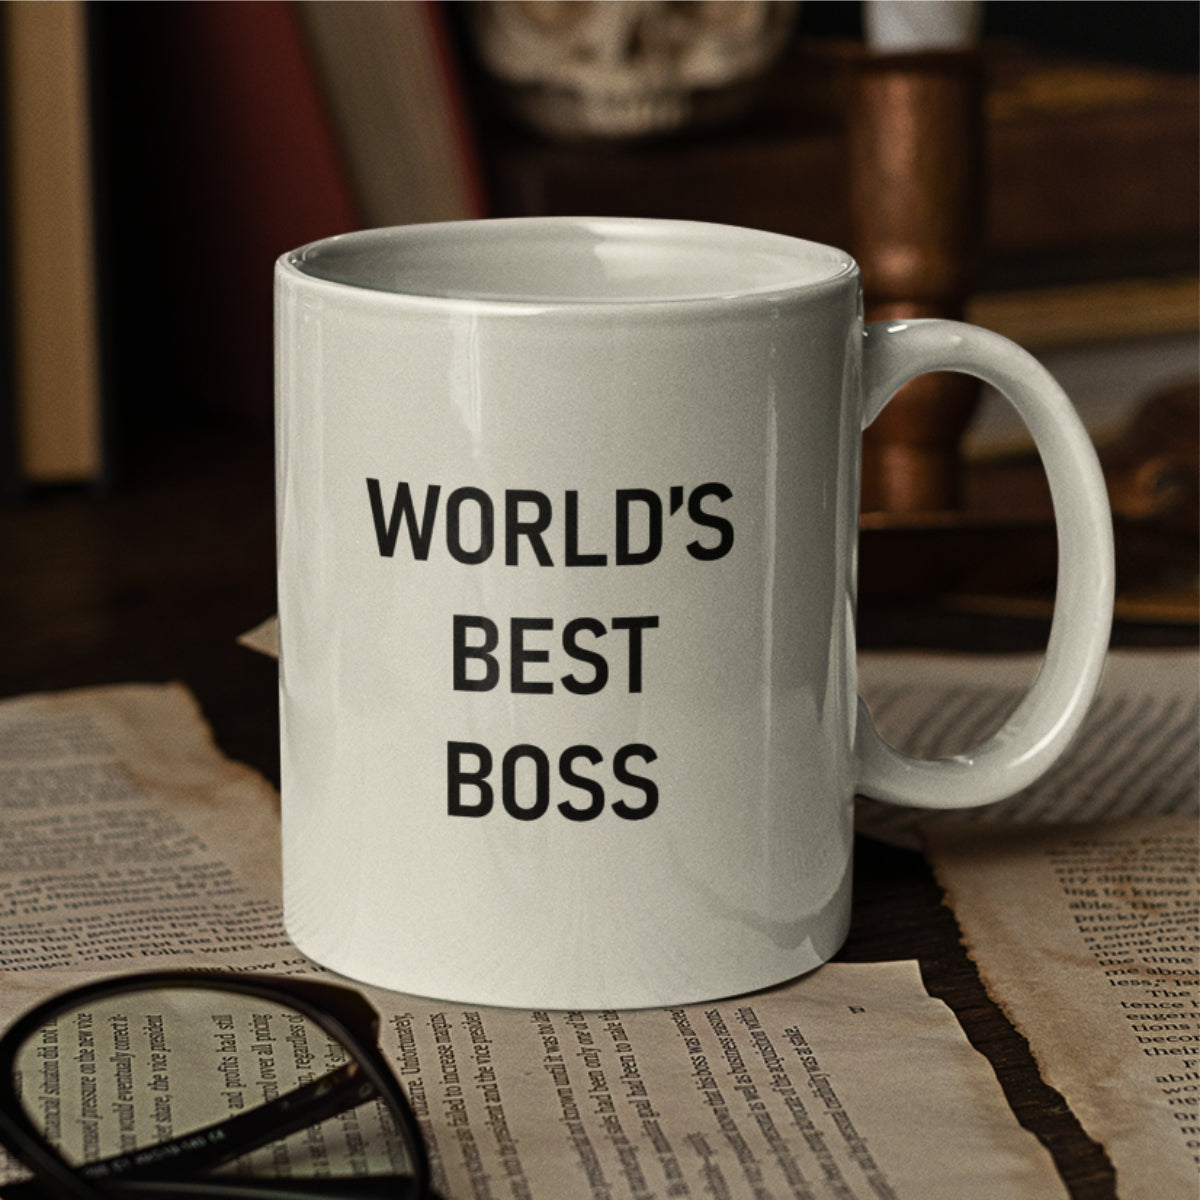 Puodelis su spauda "World's best boss"